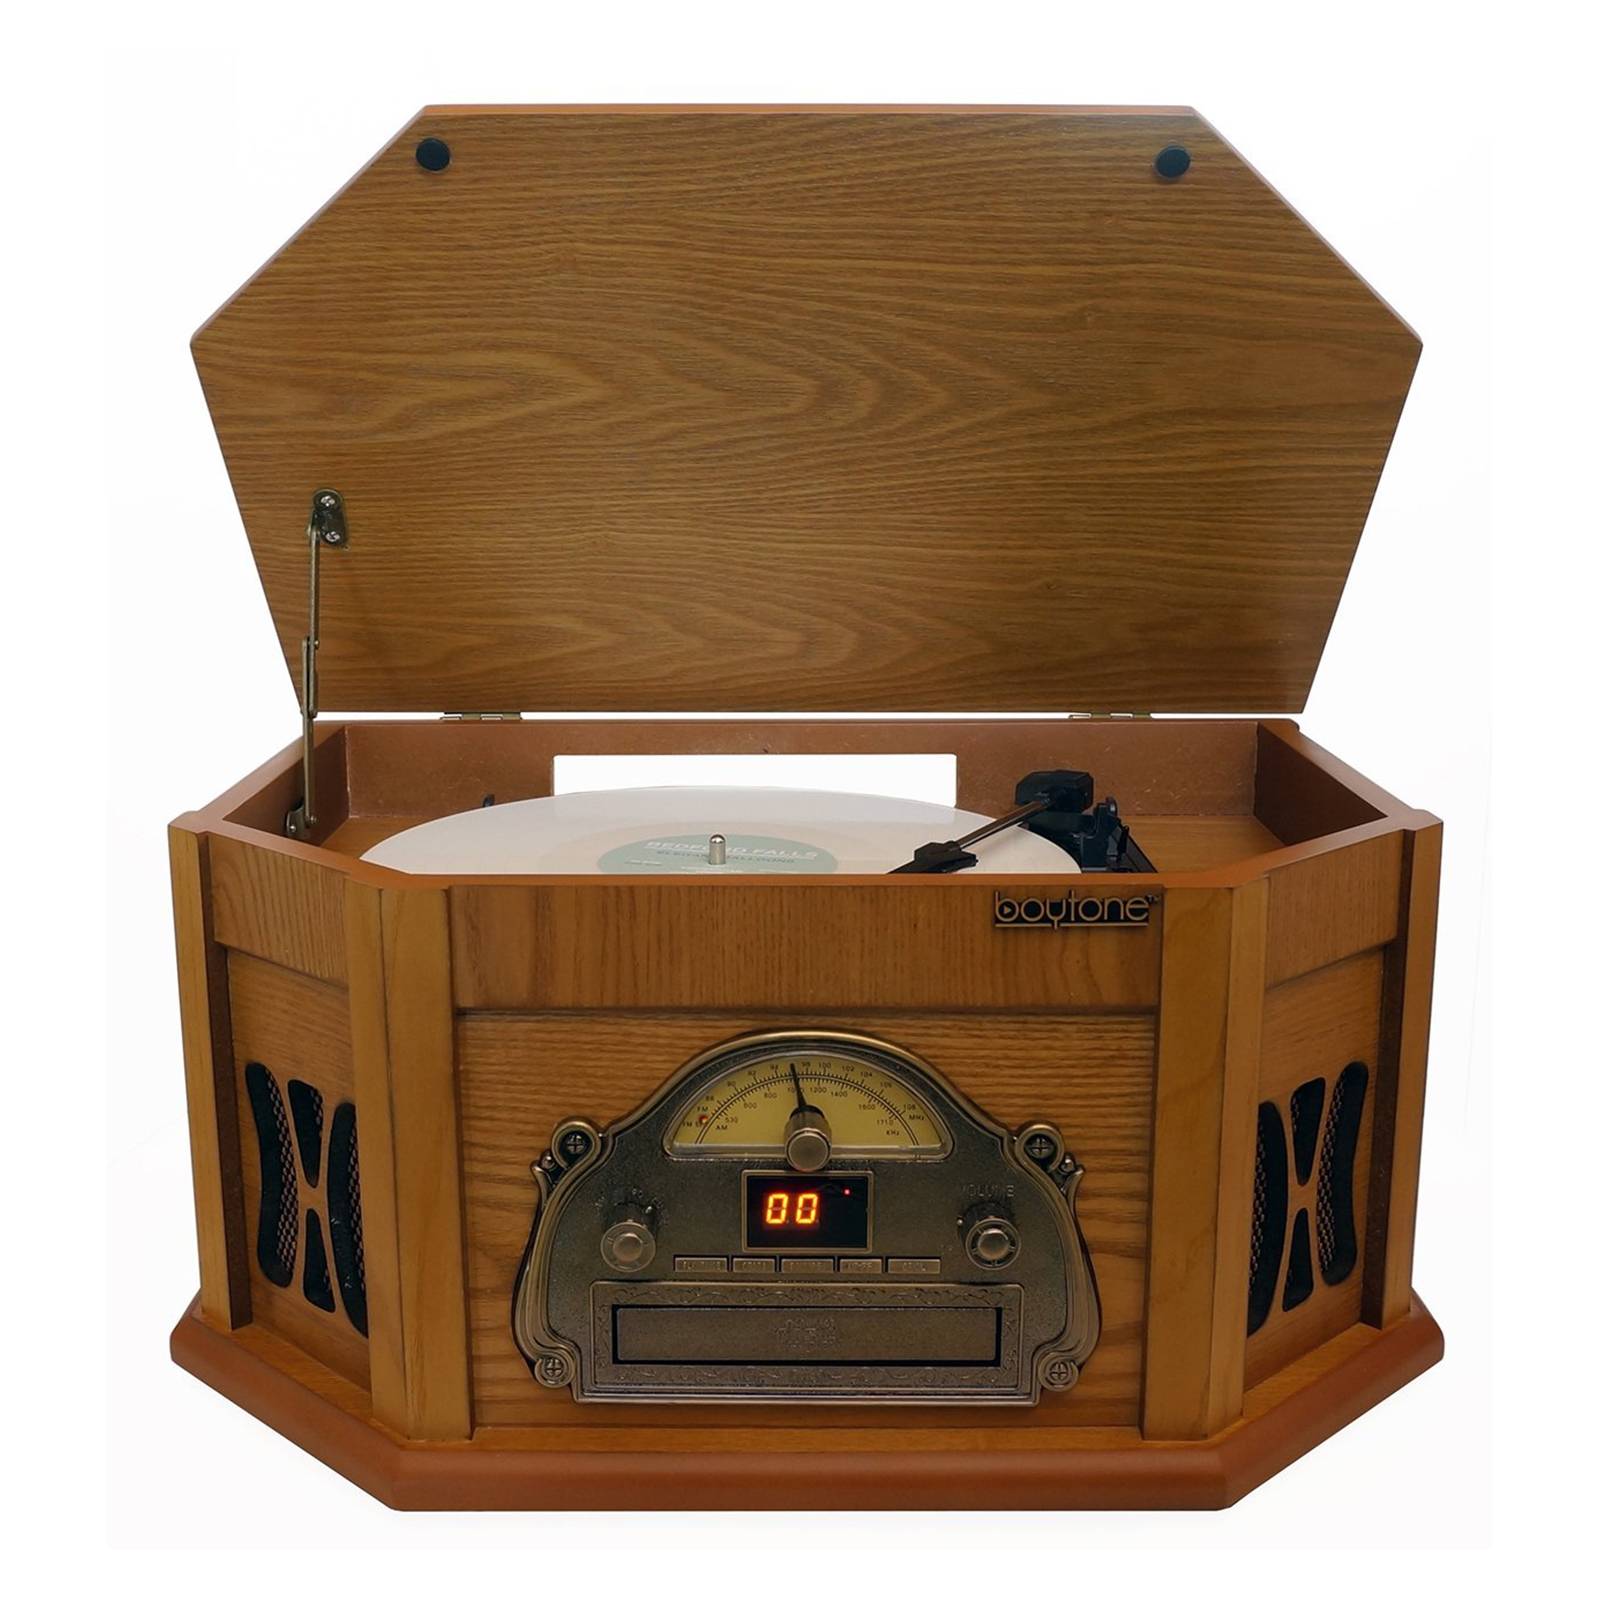 Boytone 3-Speed Stereo Turntable with AM-FM Radio, Wood - image 1 of 2